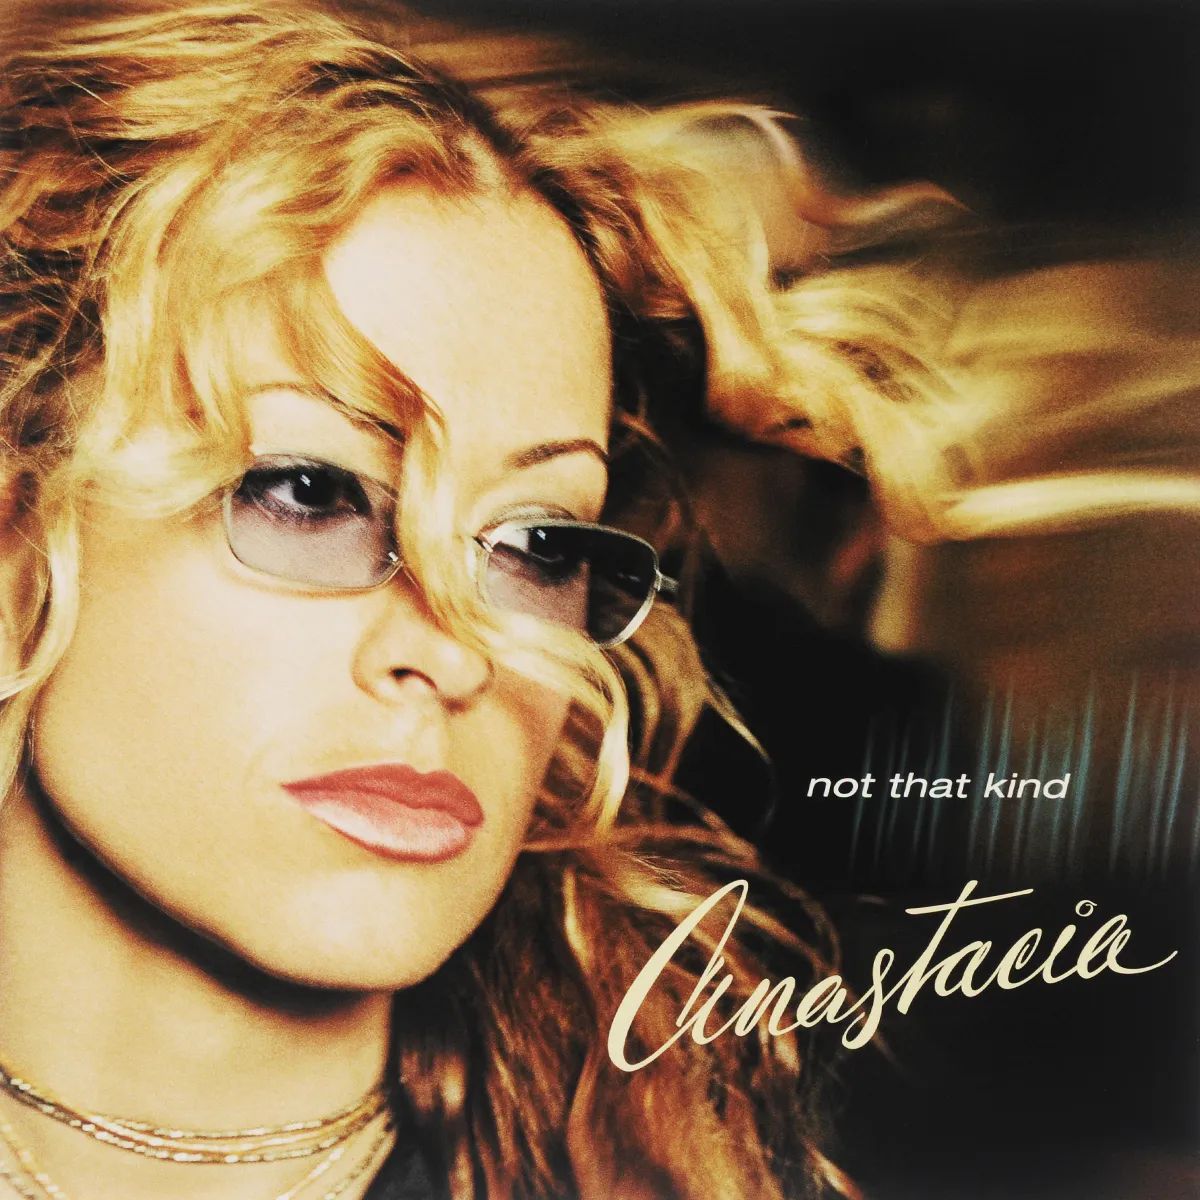 Виниловая пластинка Anastacia, Not That Kind (8719262001473) цена и фото